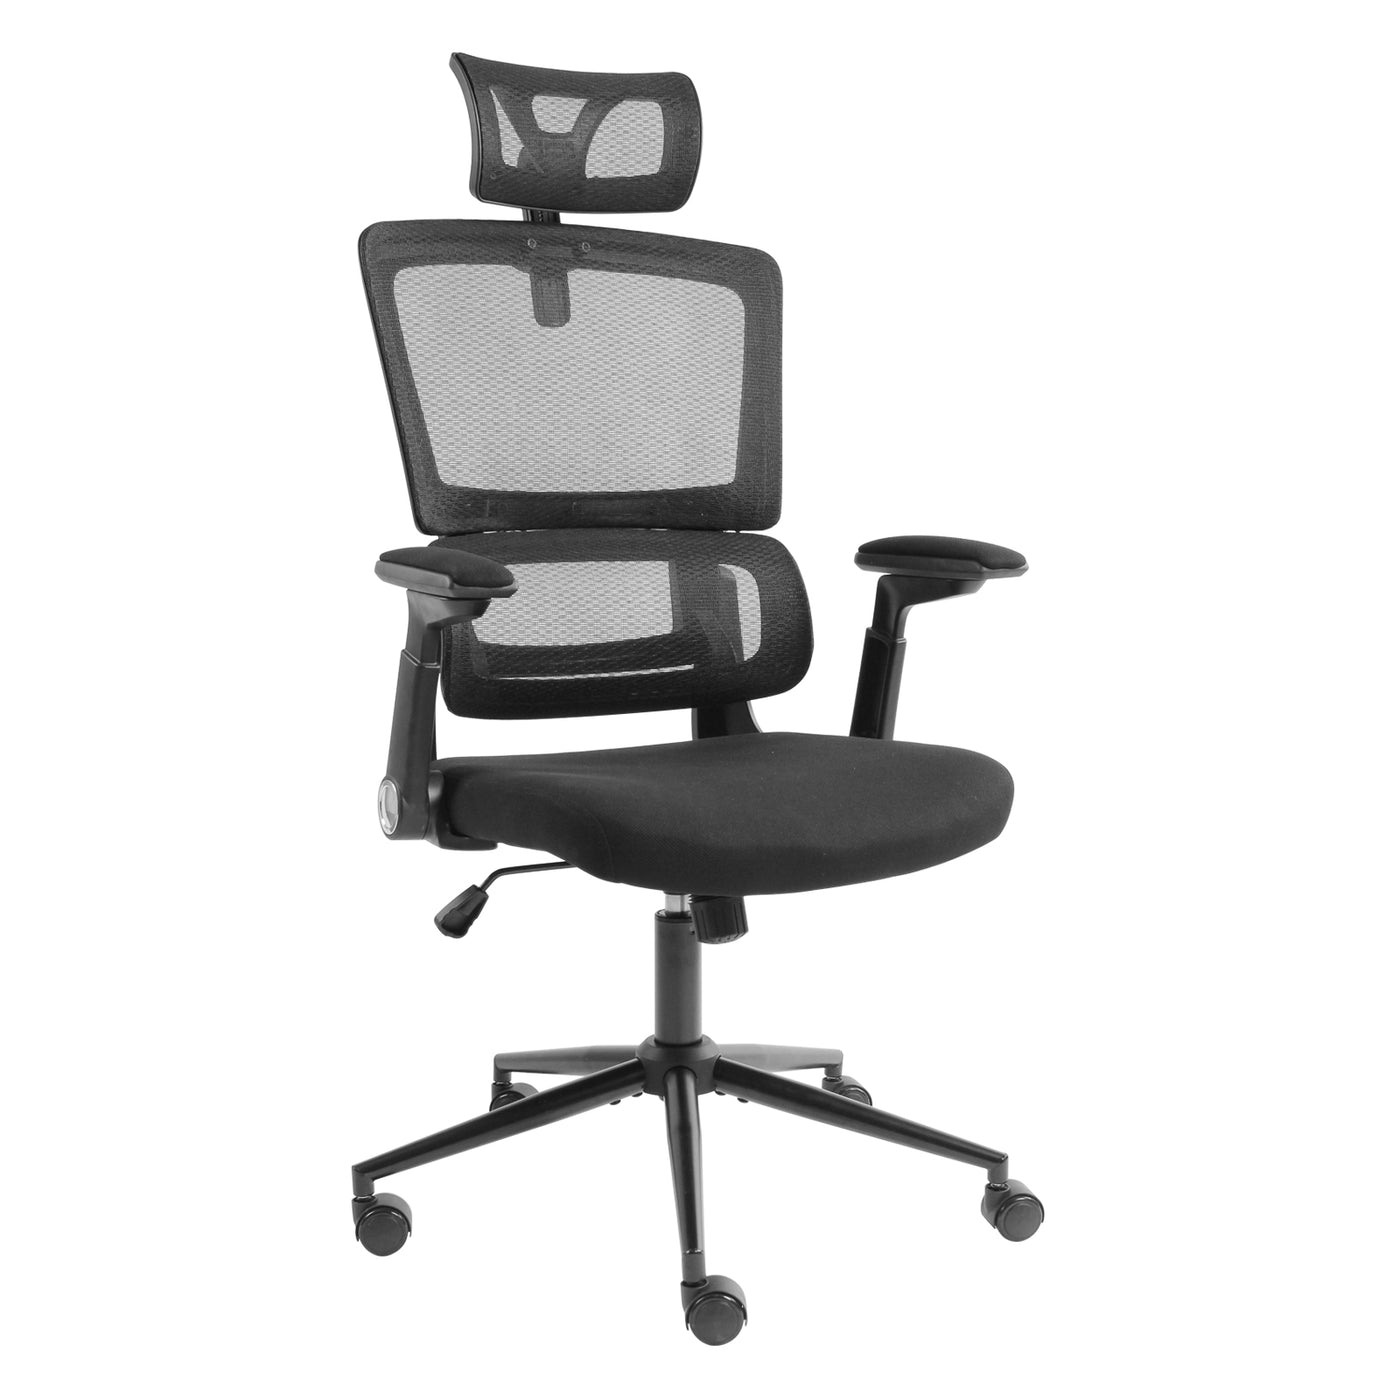 Ergonomic Home Office Breathable Mesh Chair Flip-up Armrest Computer Task Chair